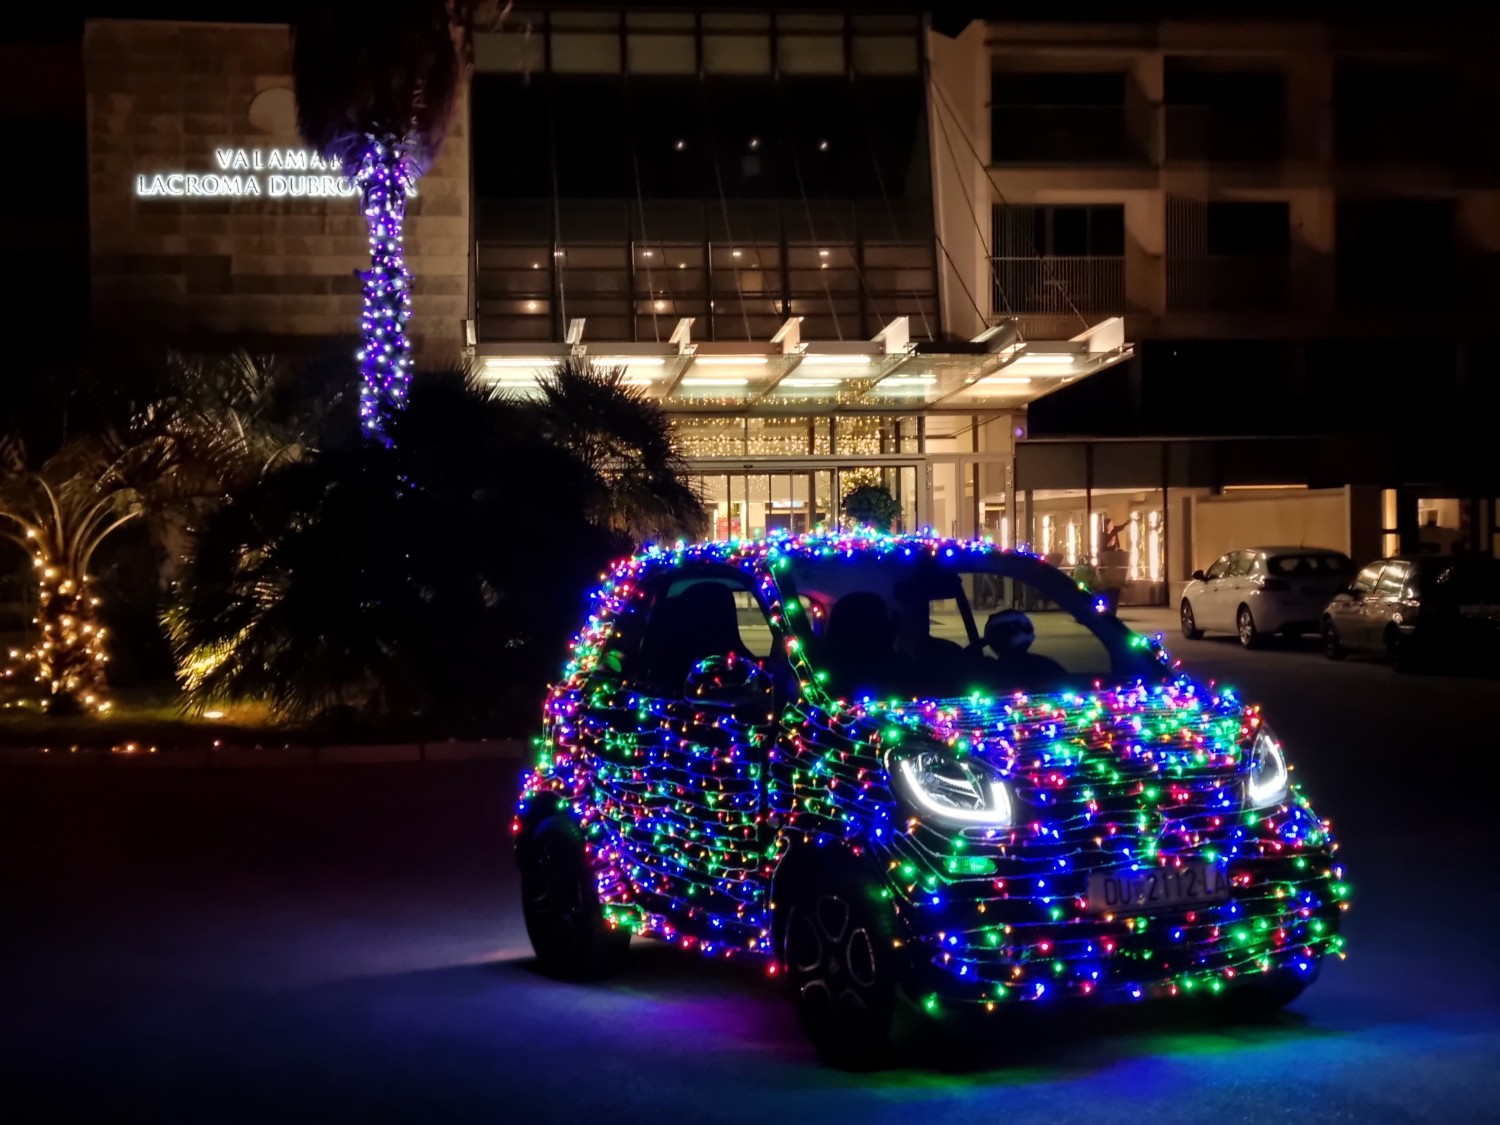 Dubrovčane oduševio božićni automobil prekriven lampicama (FOTO)